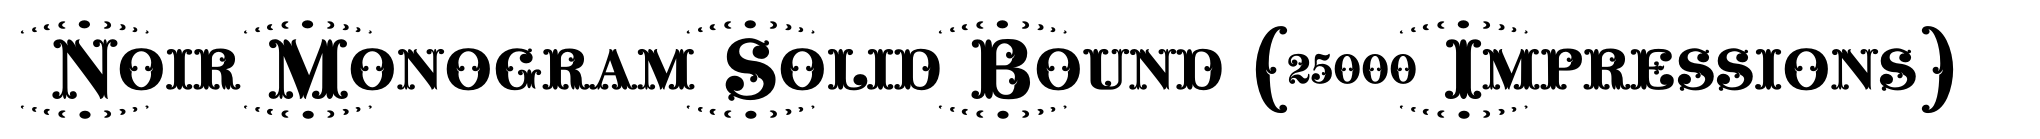 Noir Monogram Solid Bound (25000 Impressions) image